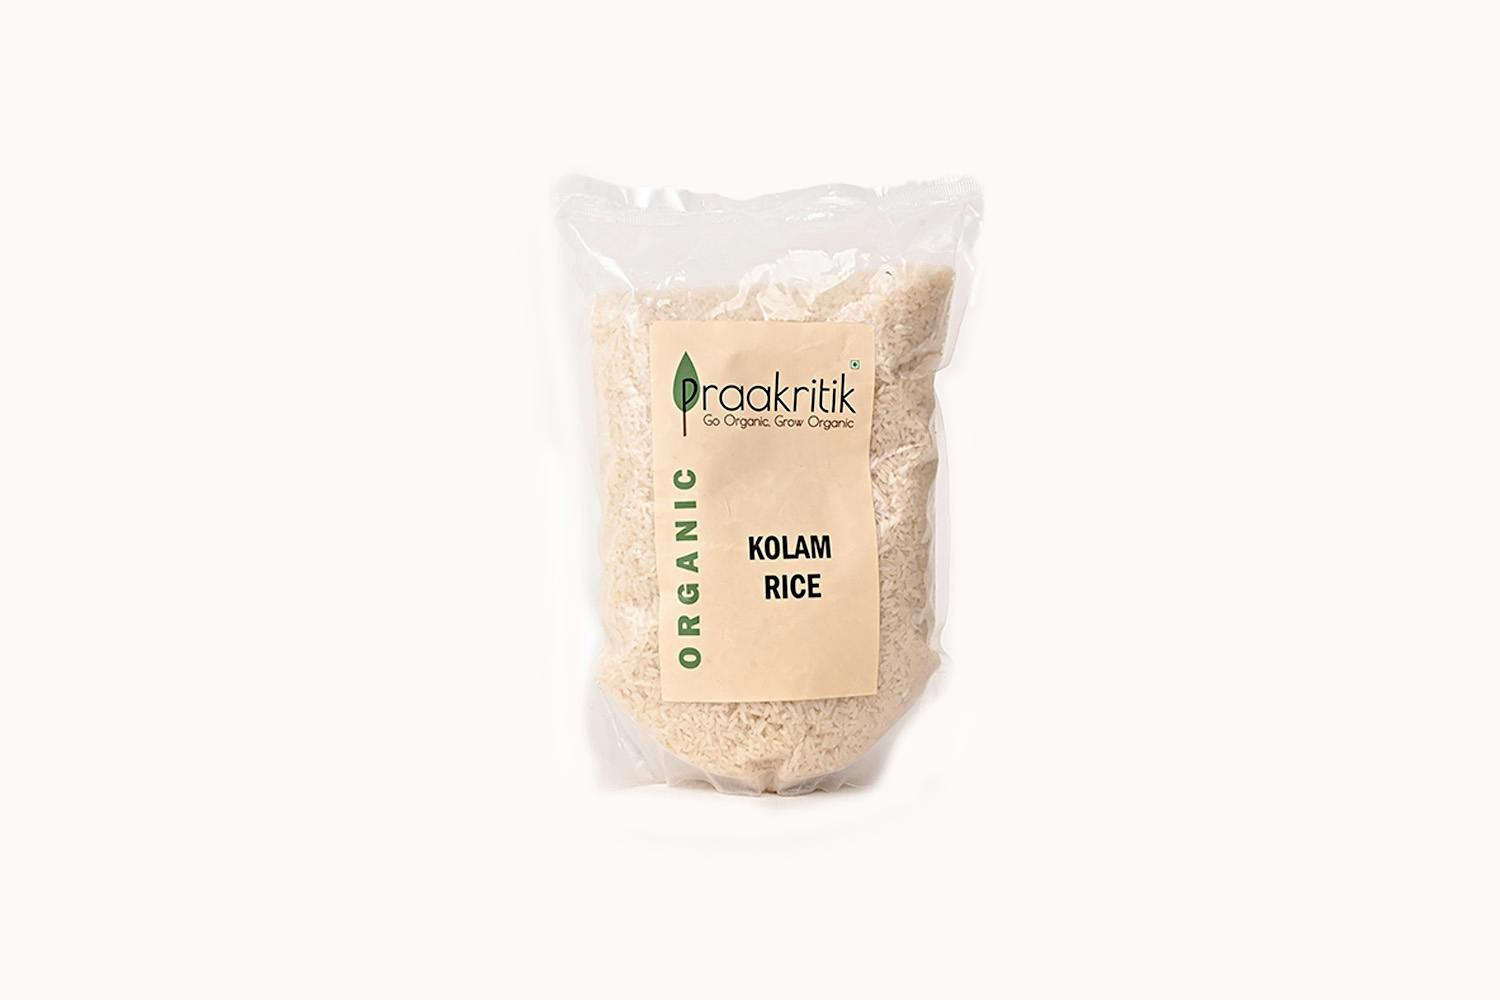 Praakritik Organic Kolam Rice